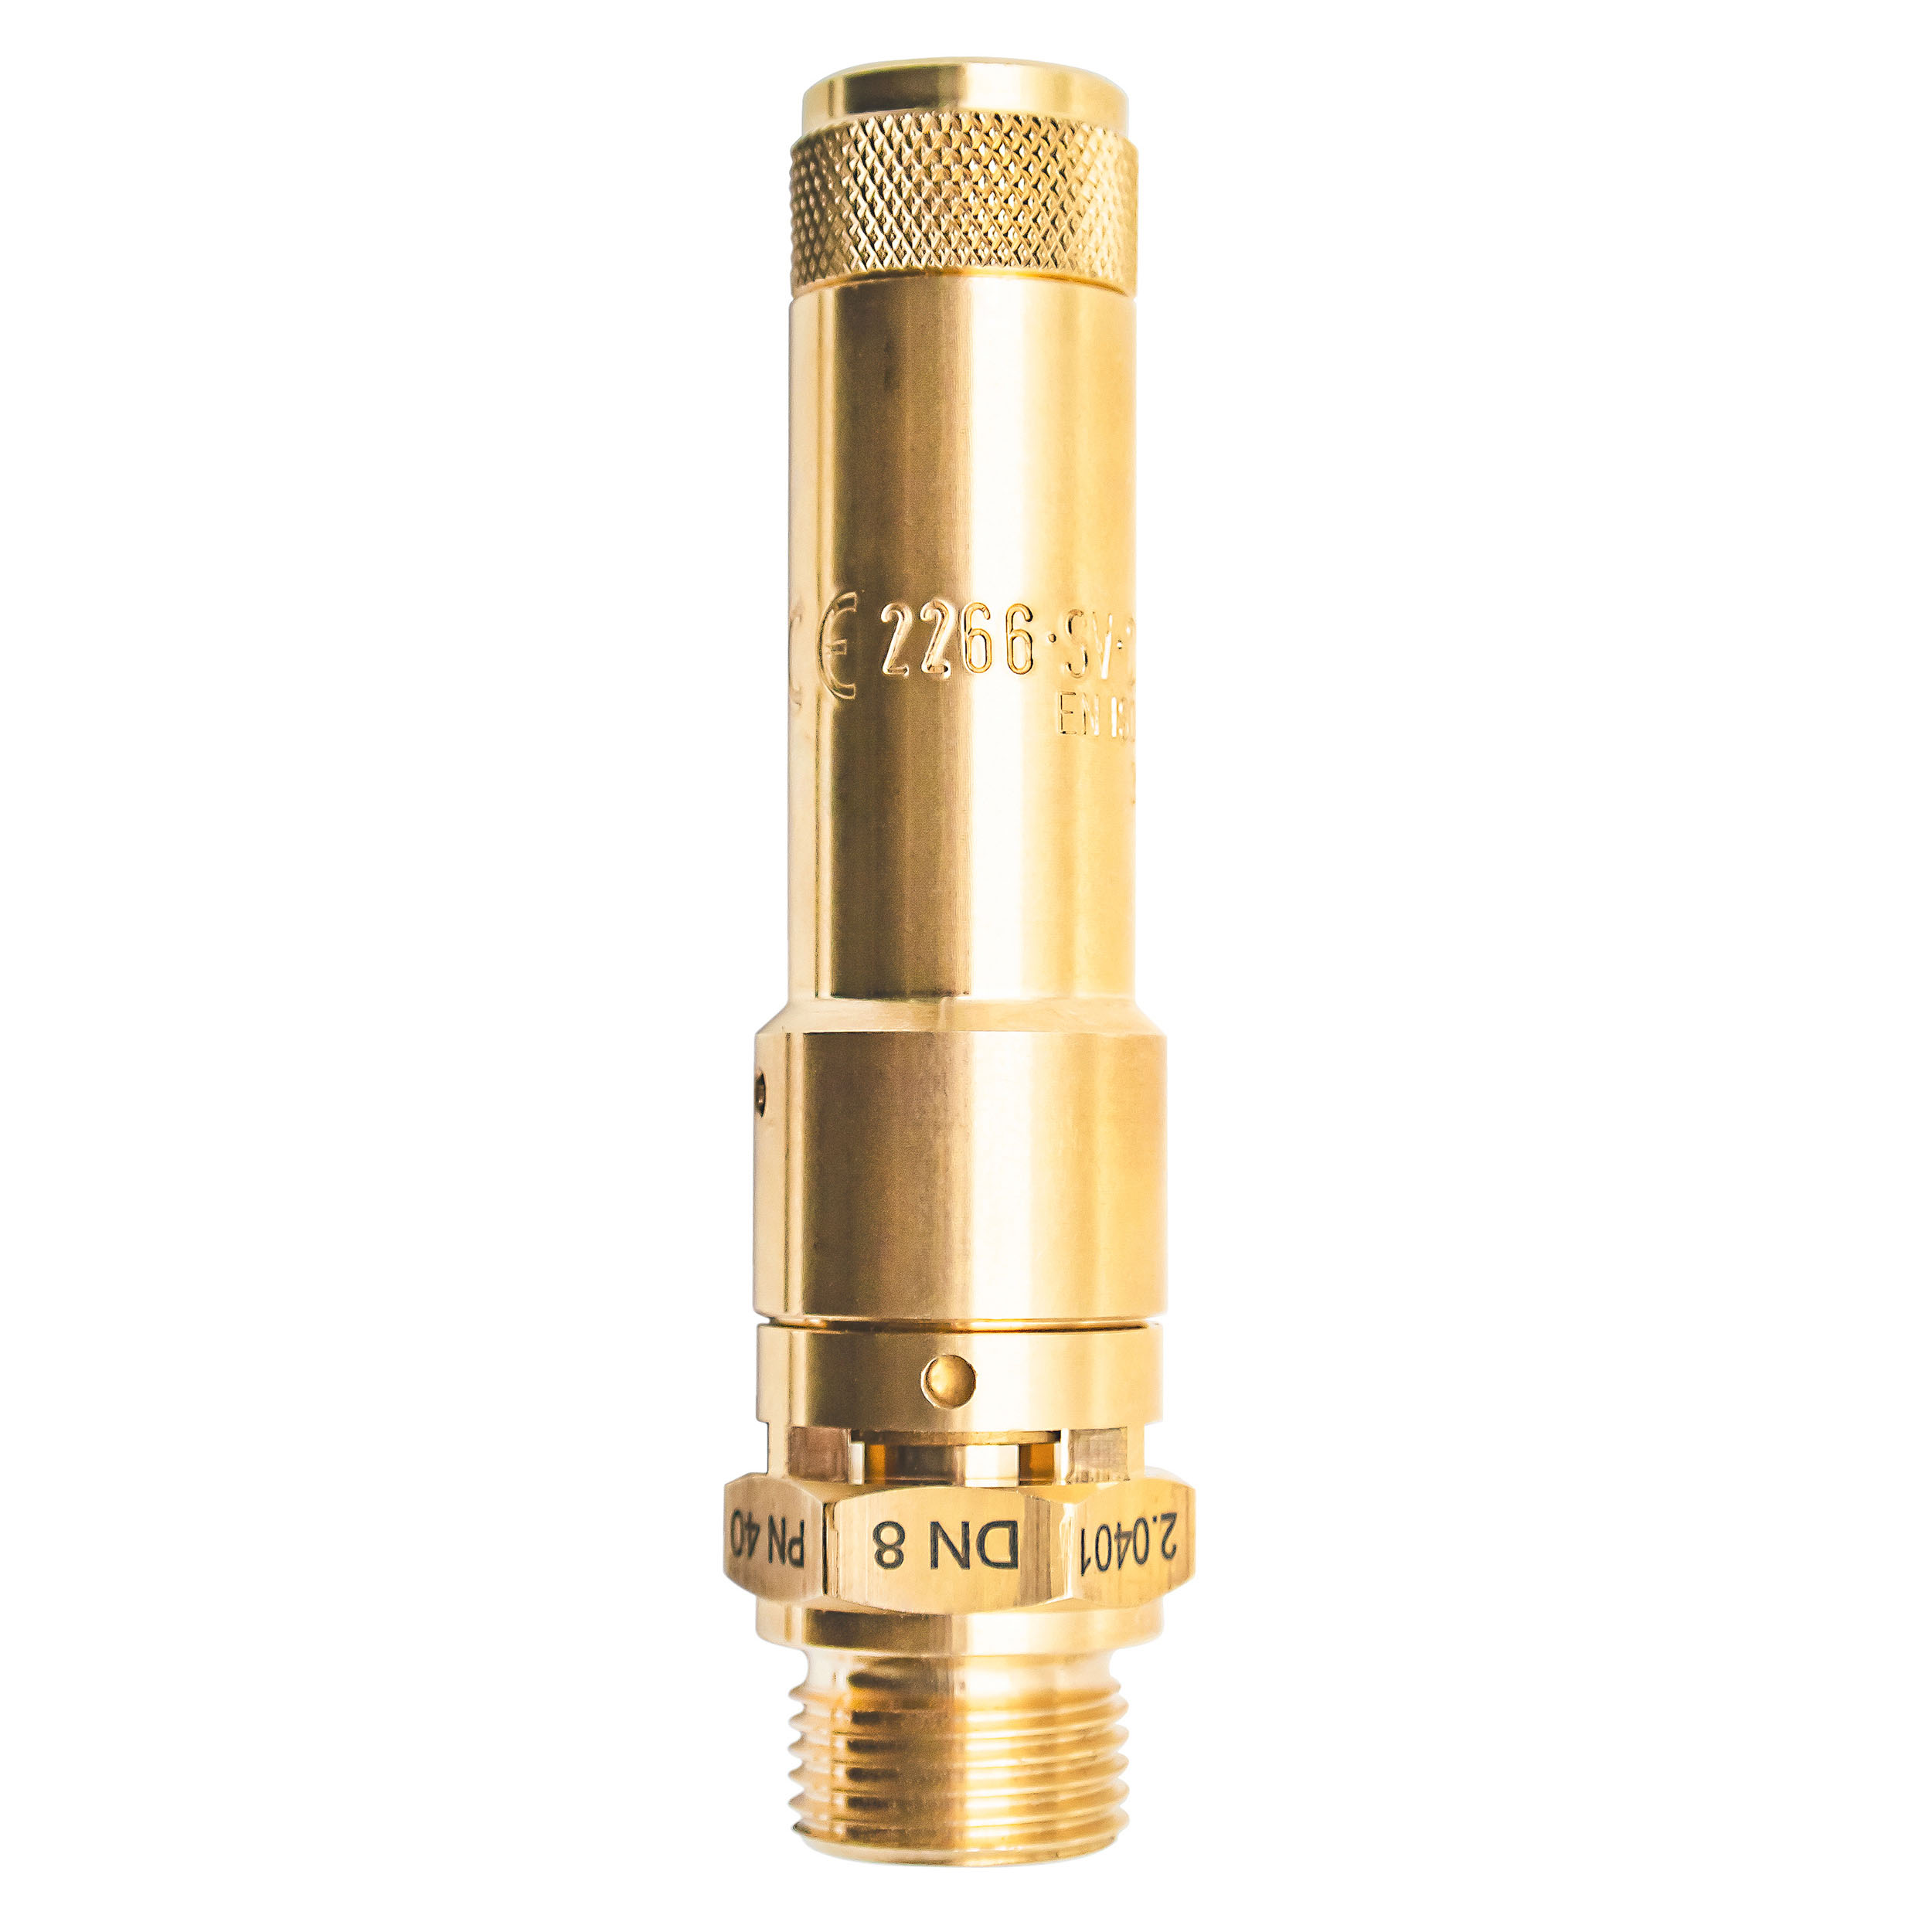 Savety valve component tested DN 8, G⅜, set pressure: 4.1 bar (59,45 psi)